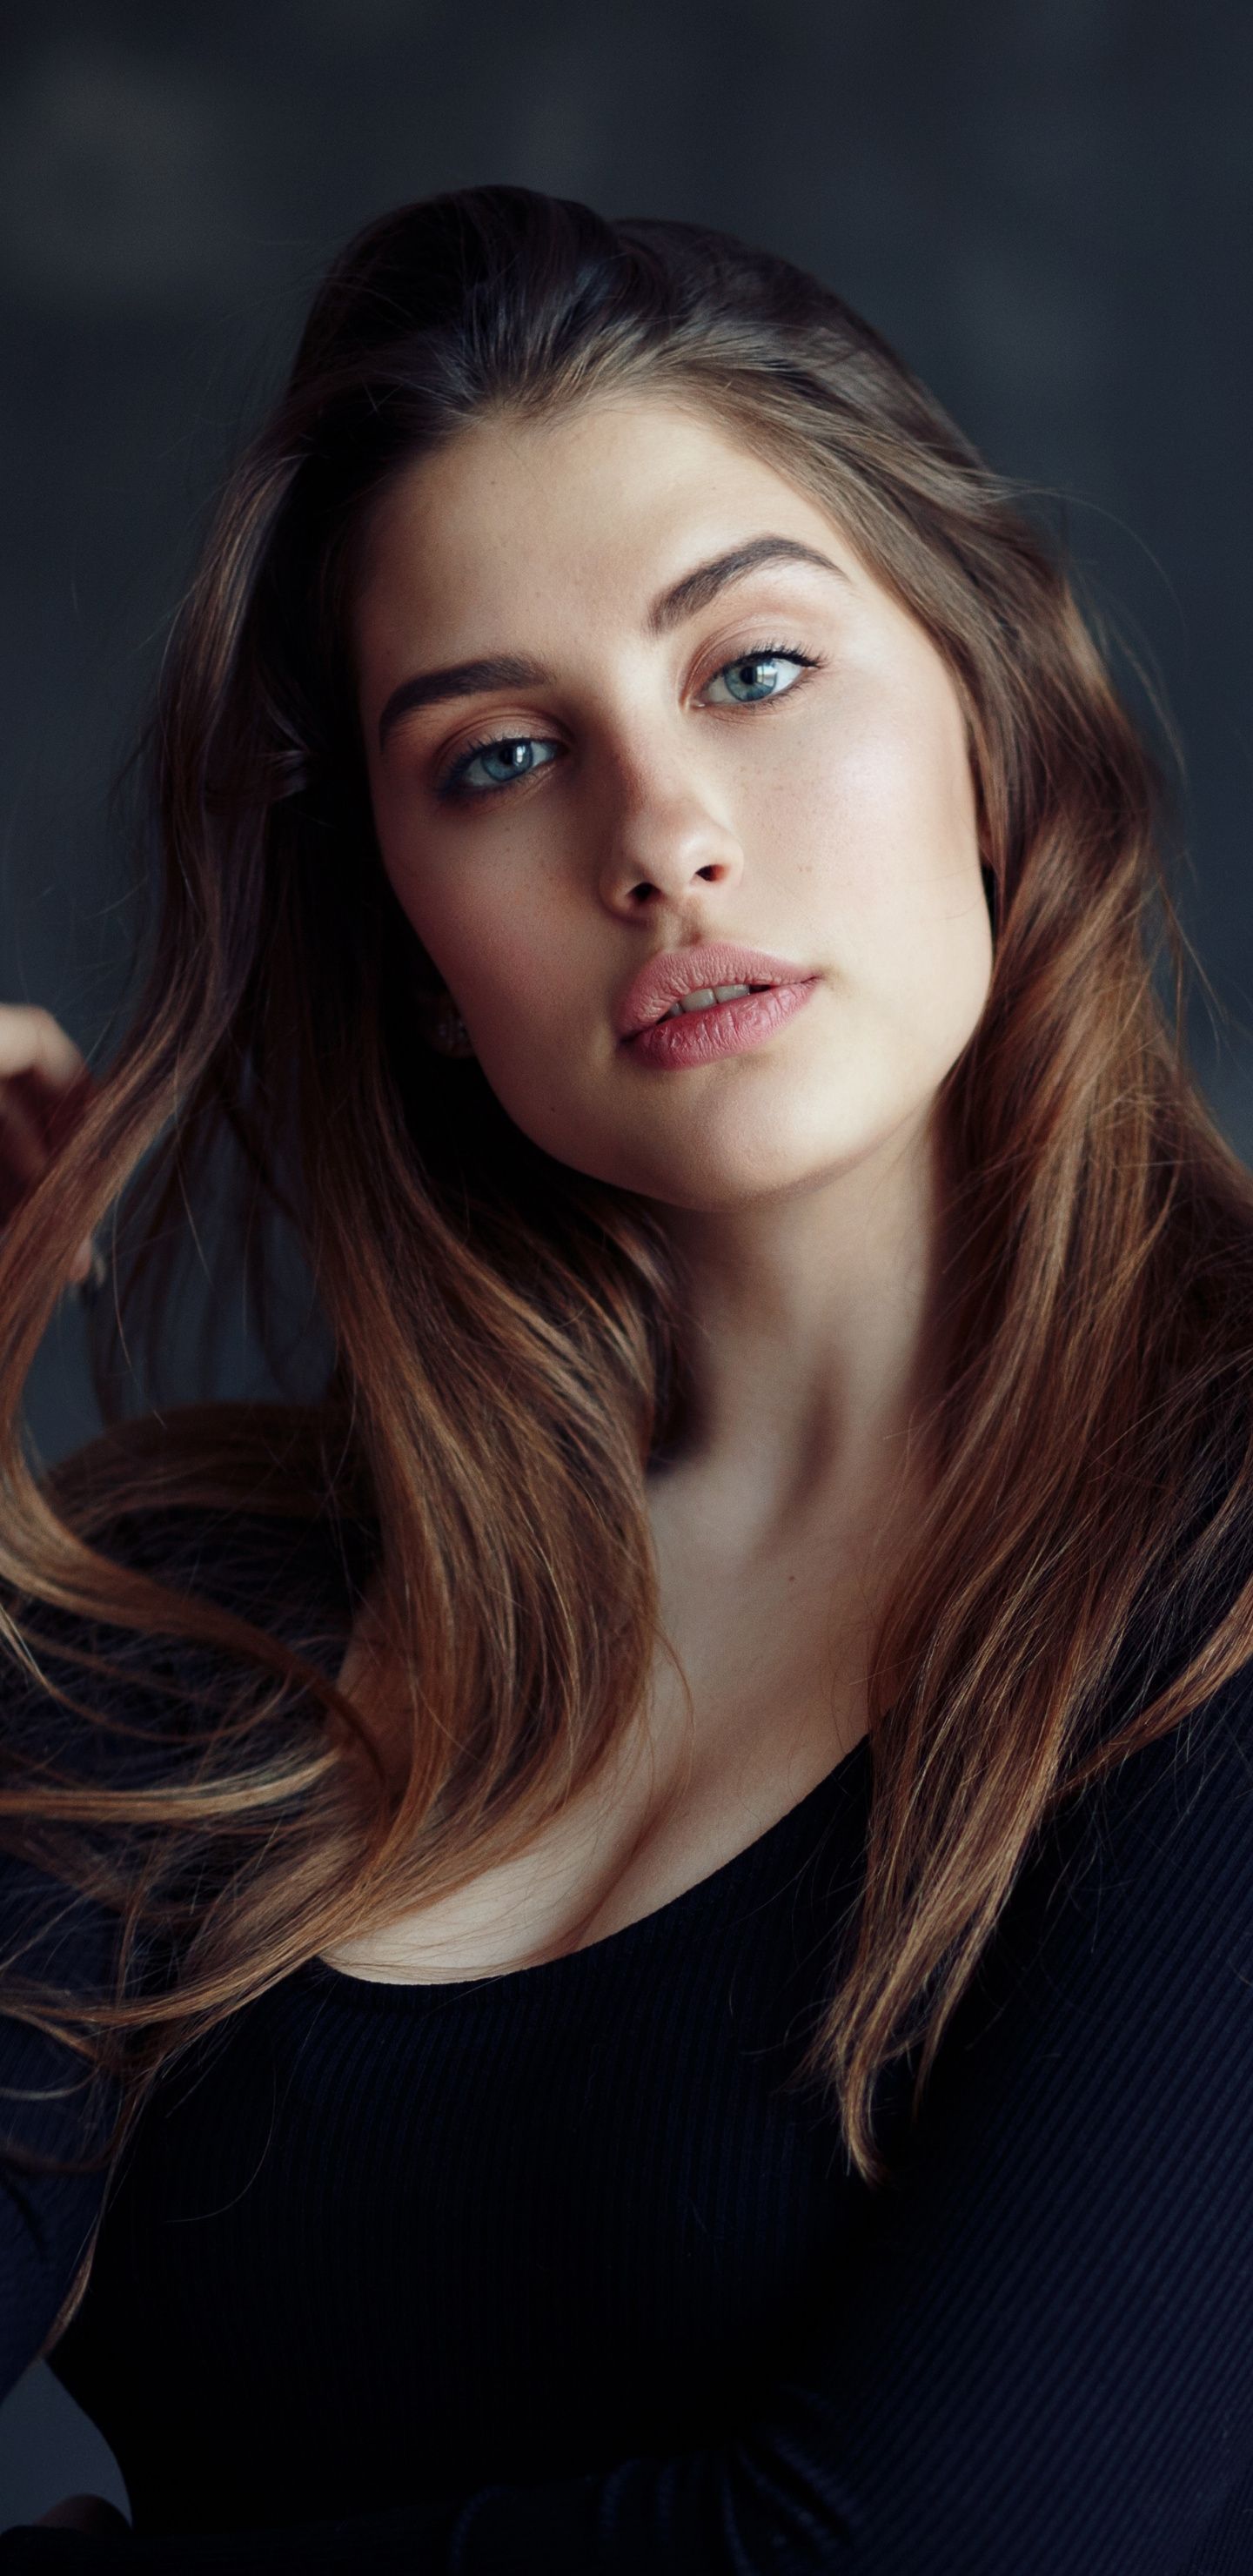 Hot and brunette, girl model, beautiful wallpaper. Girl model, Model photo, Beautiful girl wallpaper